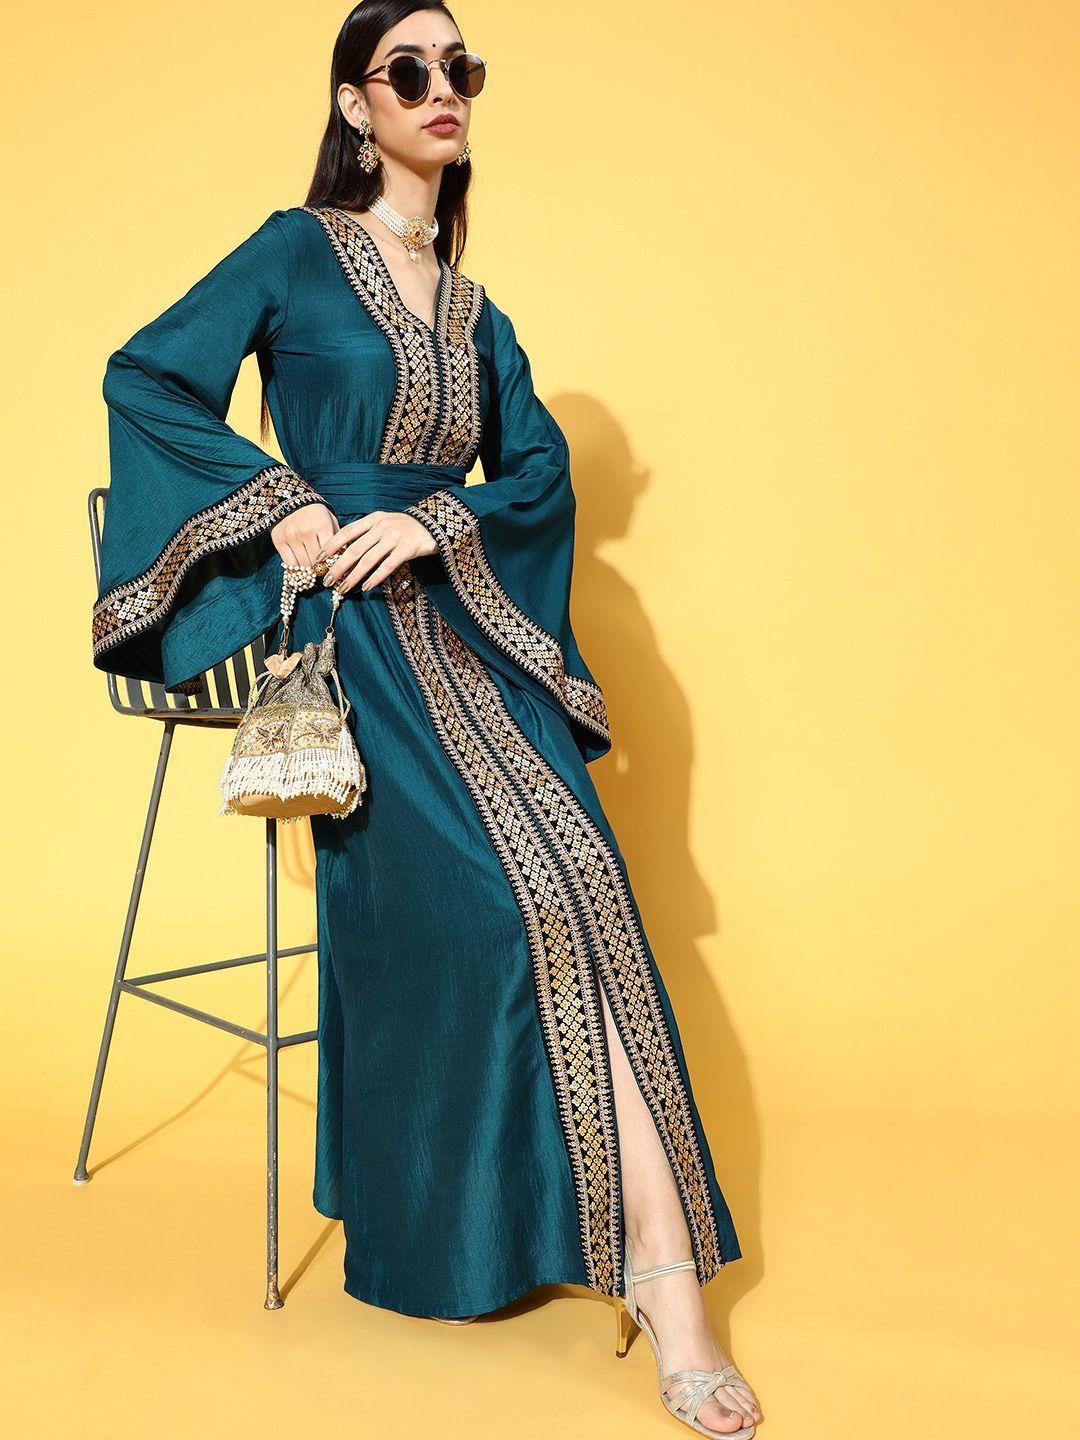 inddus-women-teal-&-golden-ethnic-motifs-ethnic-a-line-maxi-dress-with-a-belt